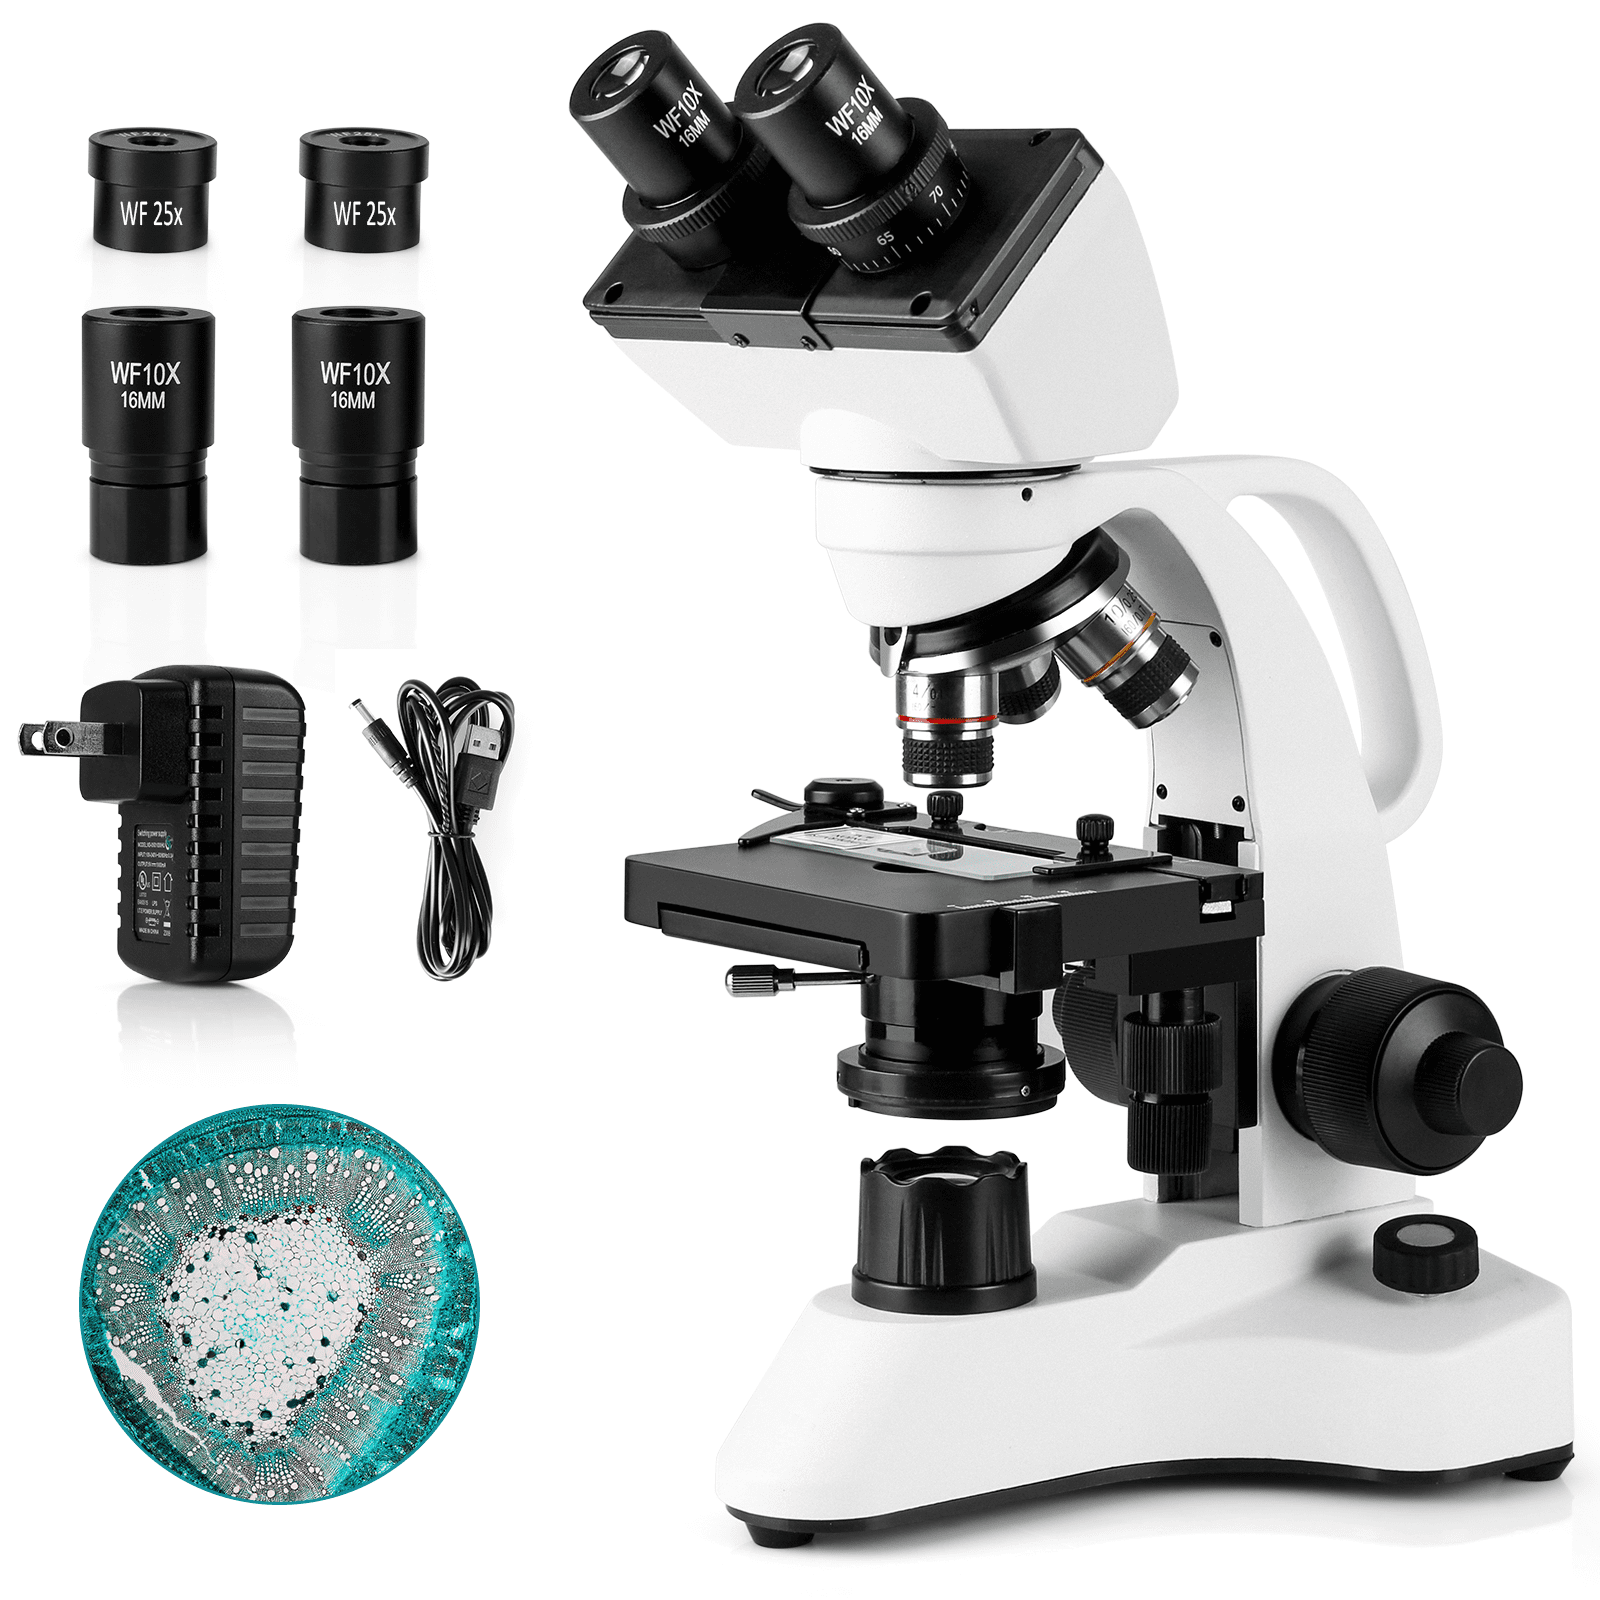 5MP WiFi Digital Eyepiece Camera Parco Scientific Trinocular Compound Microscope LED Illumination Mechanical Stage 1.25 NA Abbe Condenser 40x-1000x Magnification 10x WF Eyepieces 